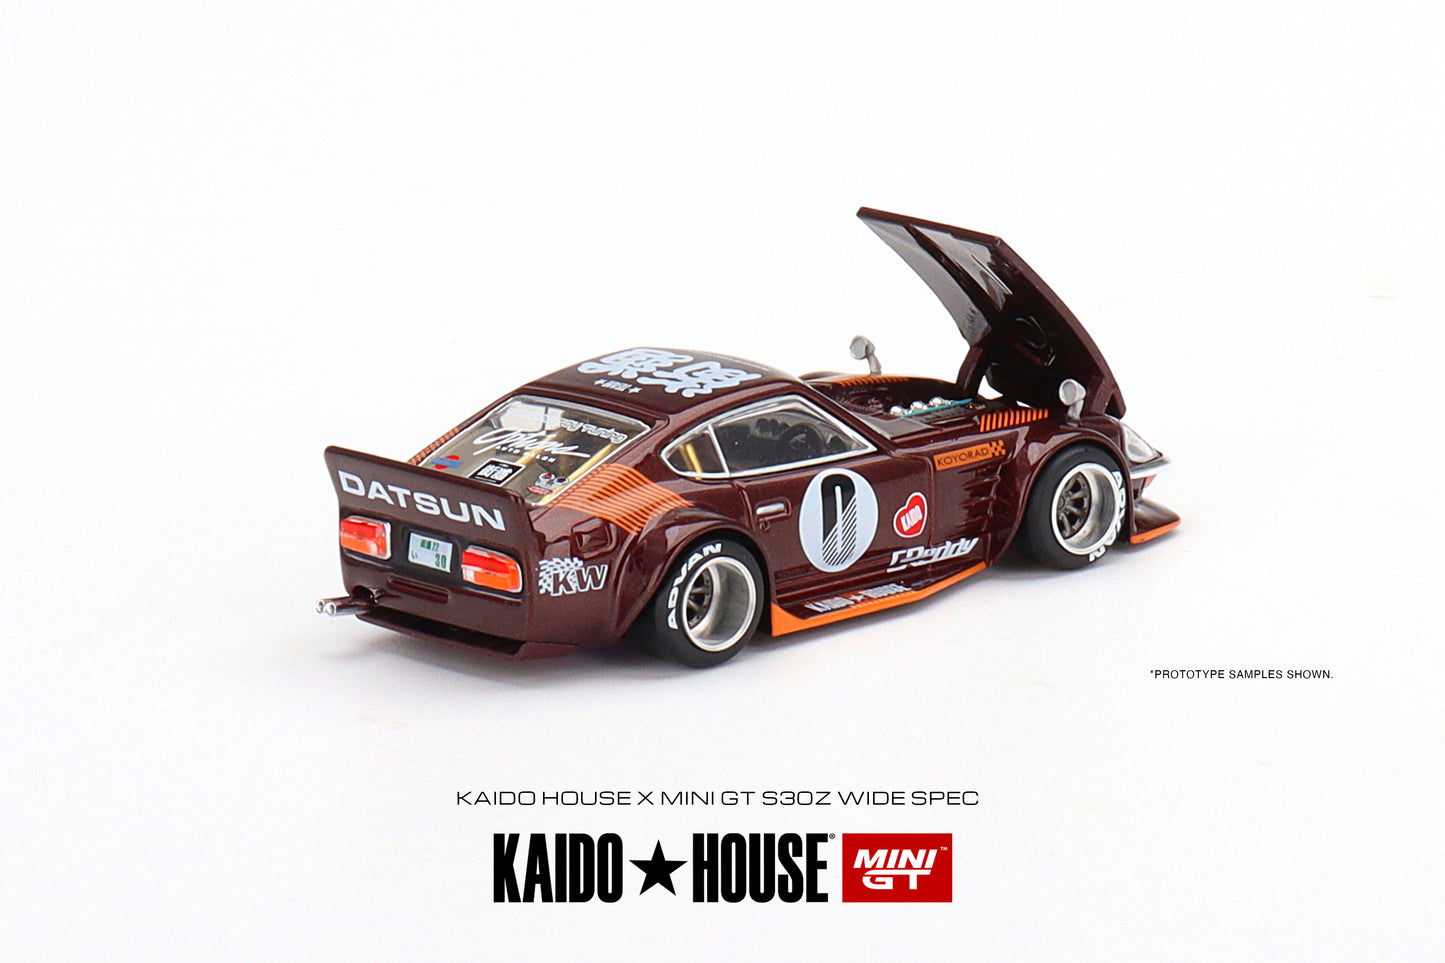 MiniGT x Kaido House 1:64 Datsun Fairlady Z Dark Red